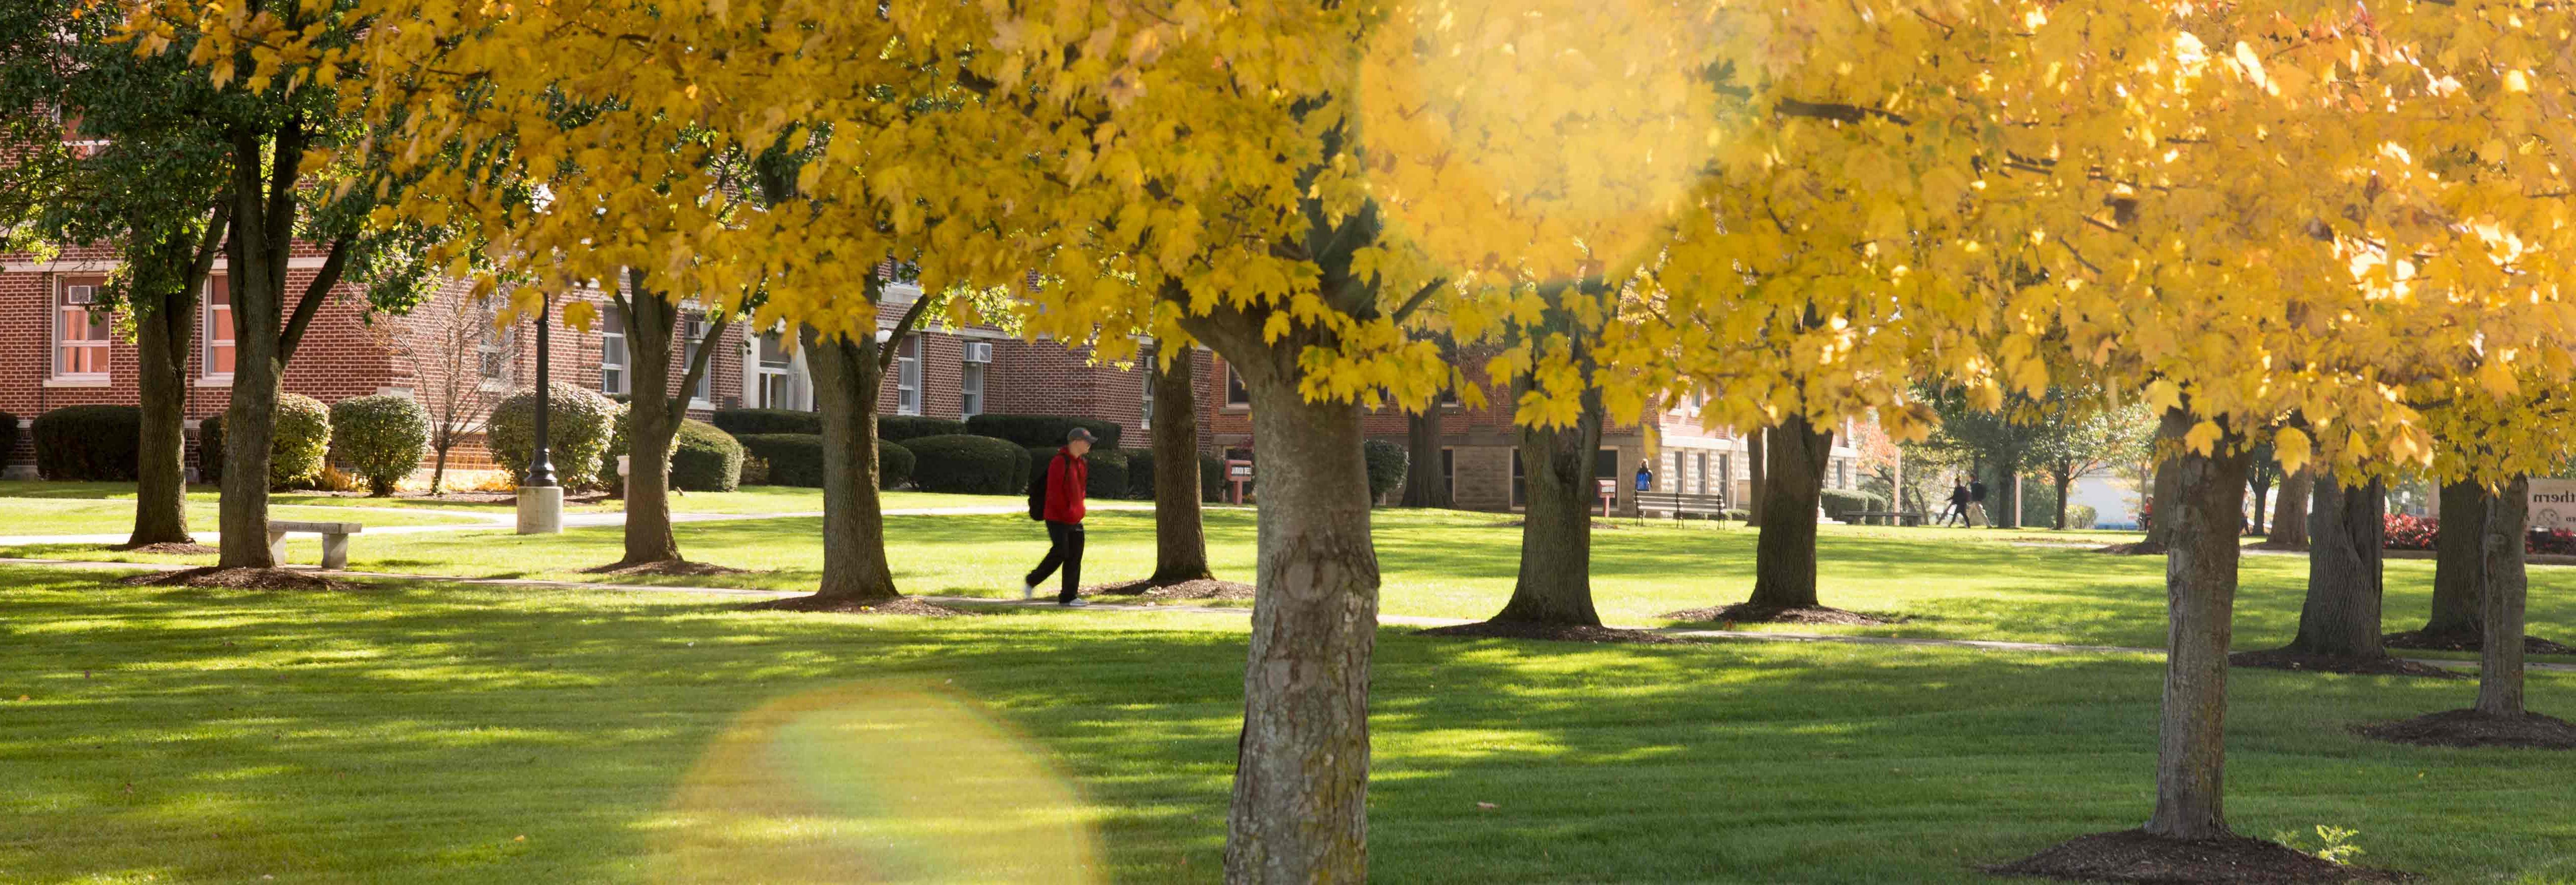 Student walks across the campus of Ohio Northern University.